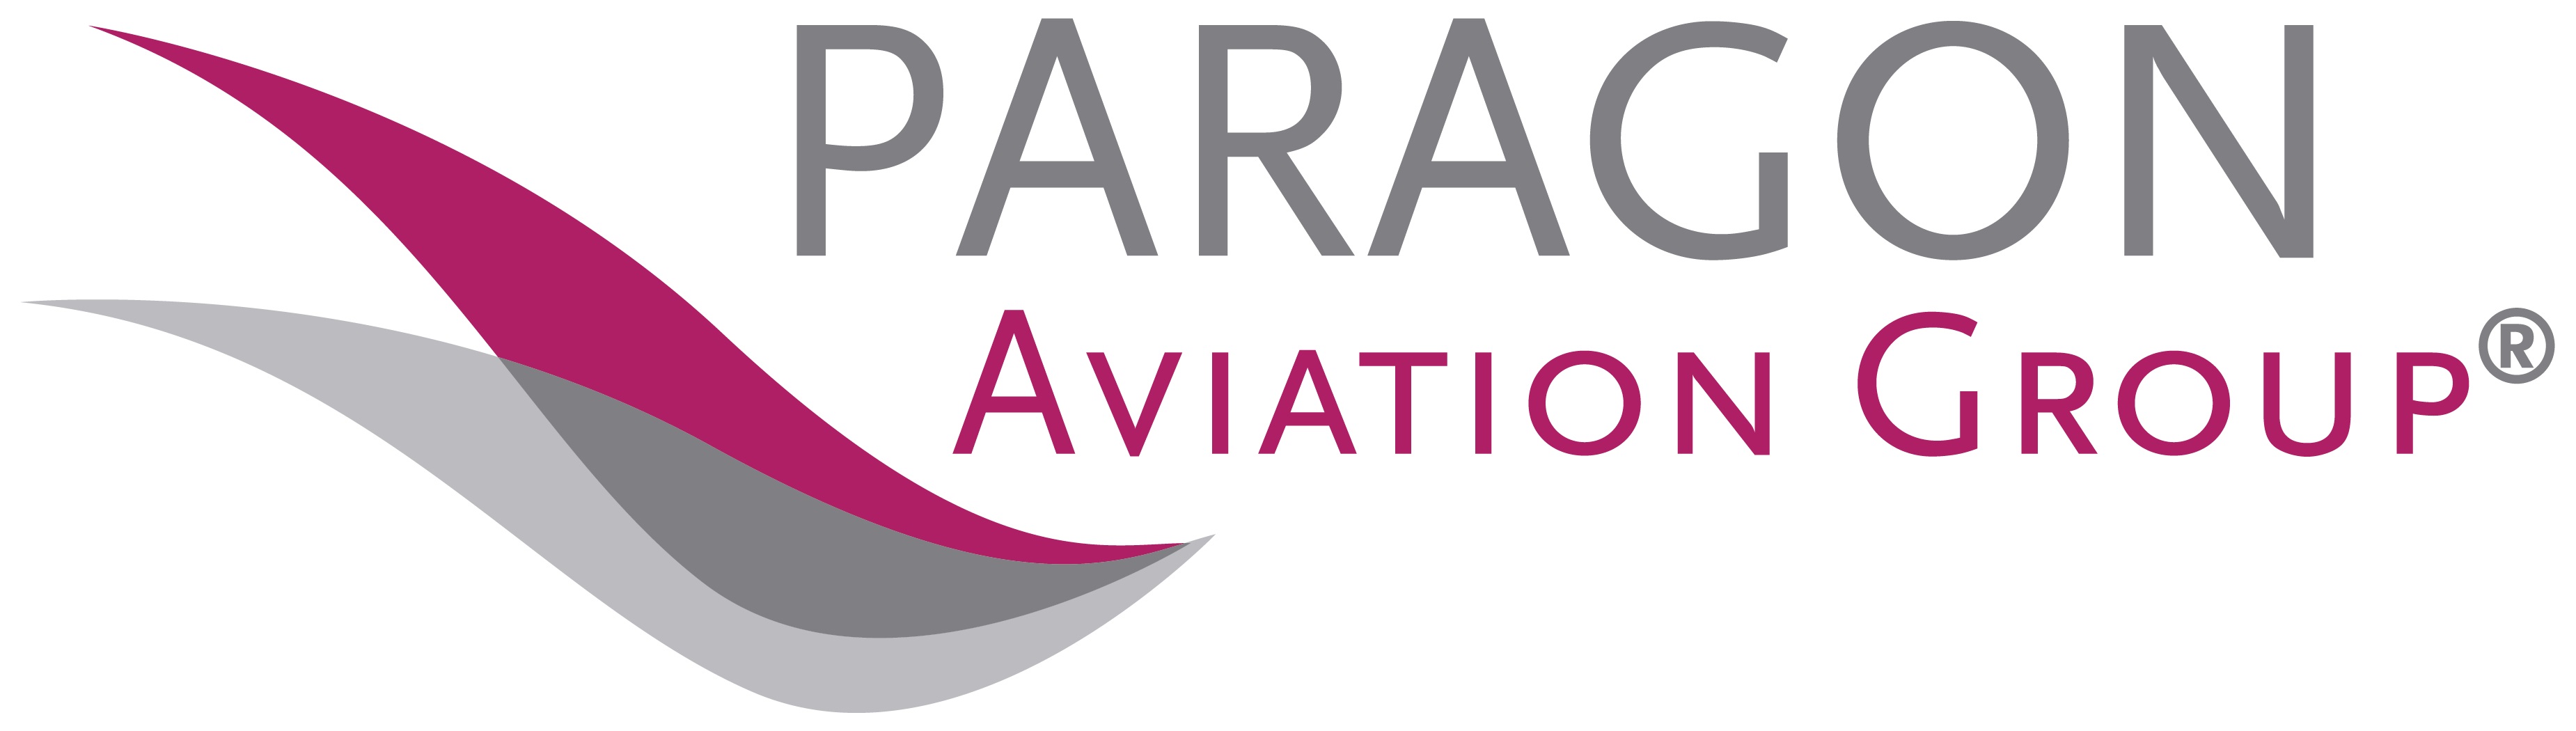 Paragon Aviation Group logo